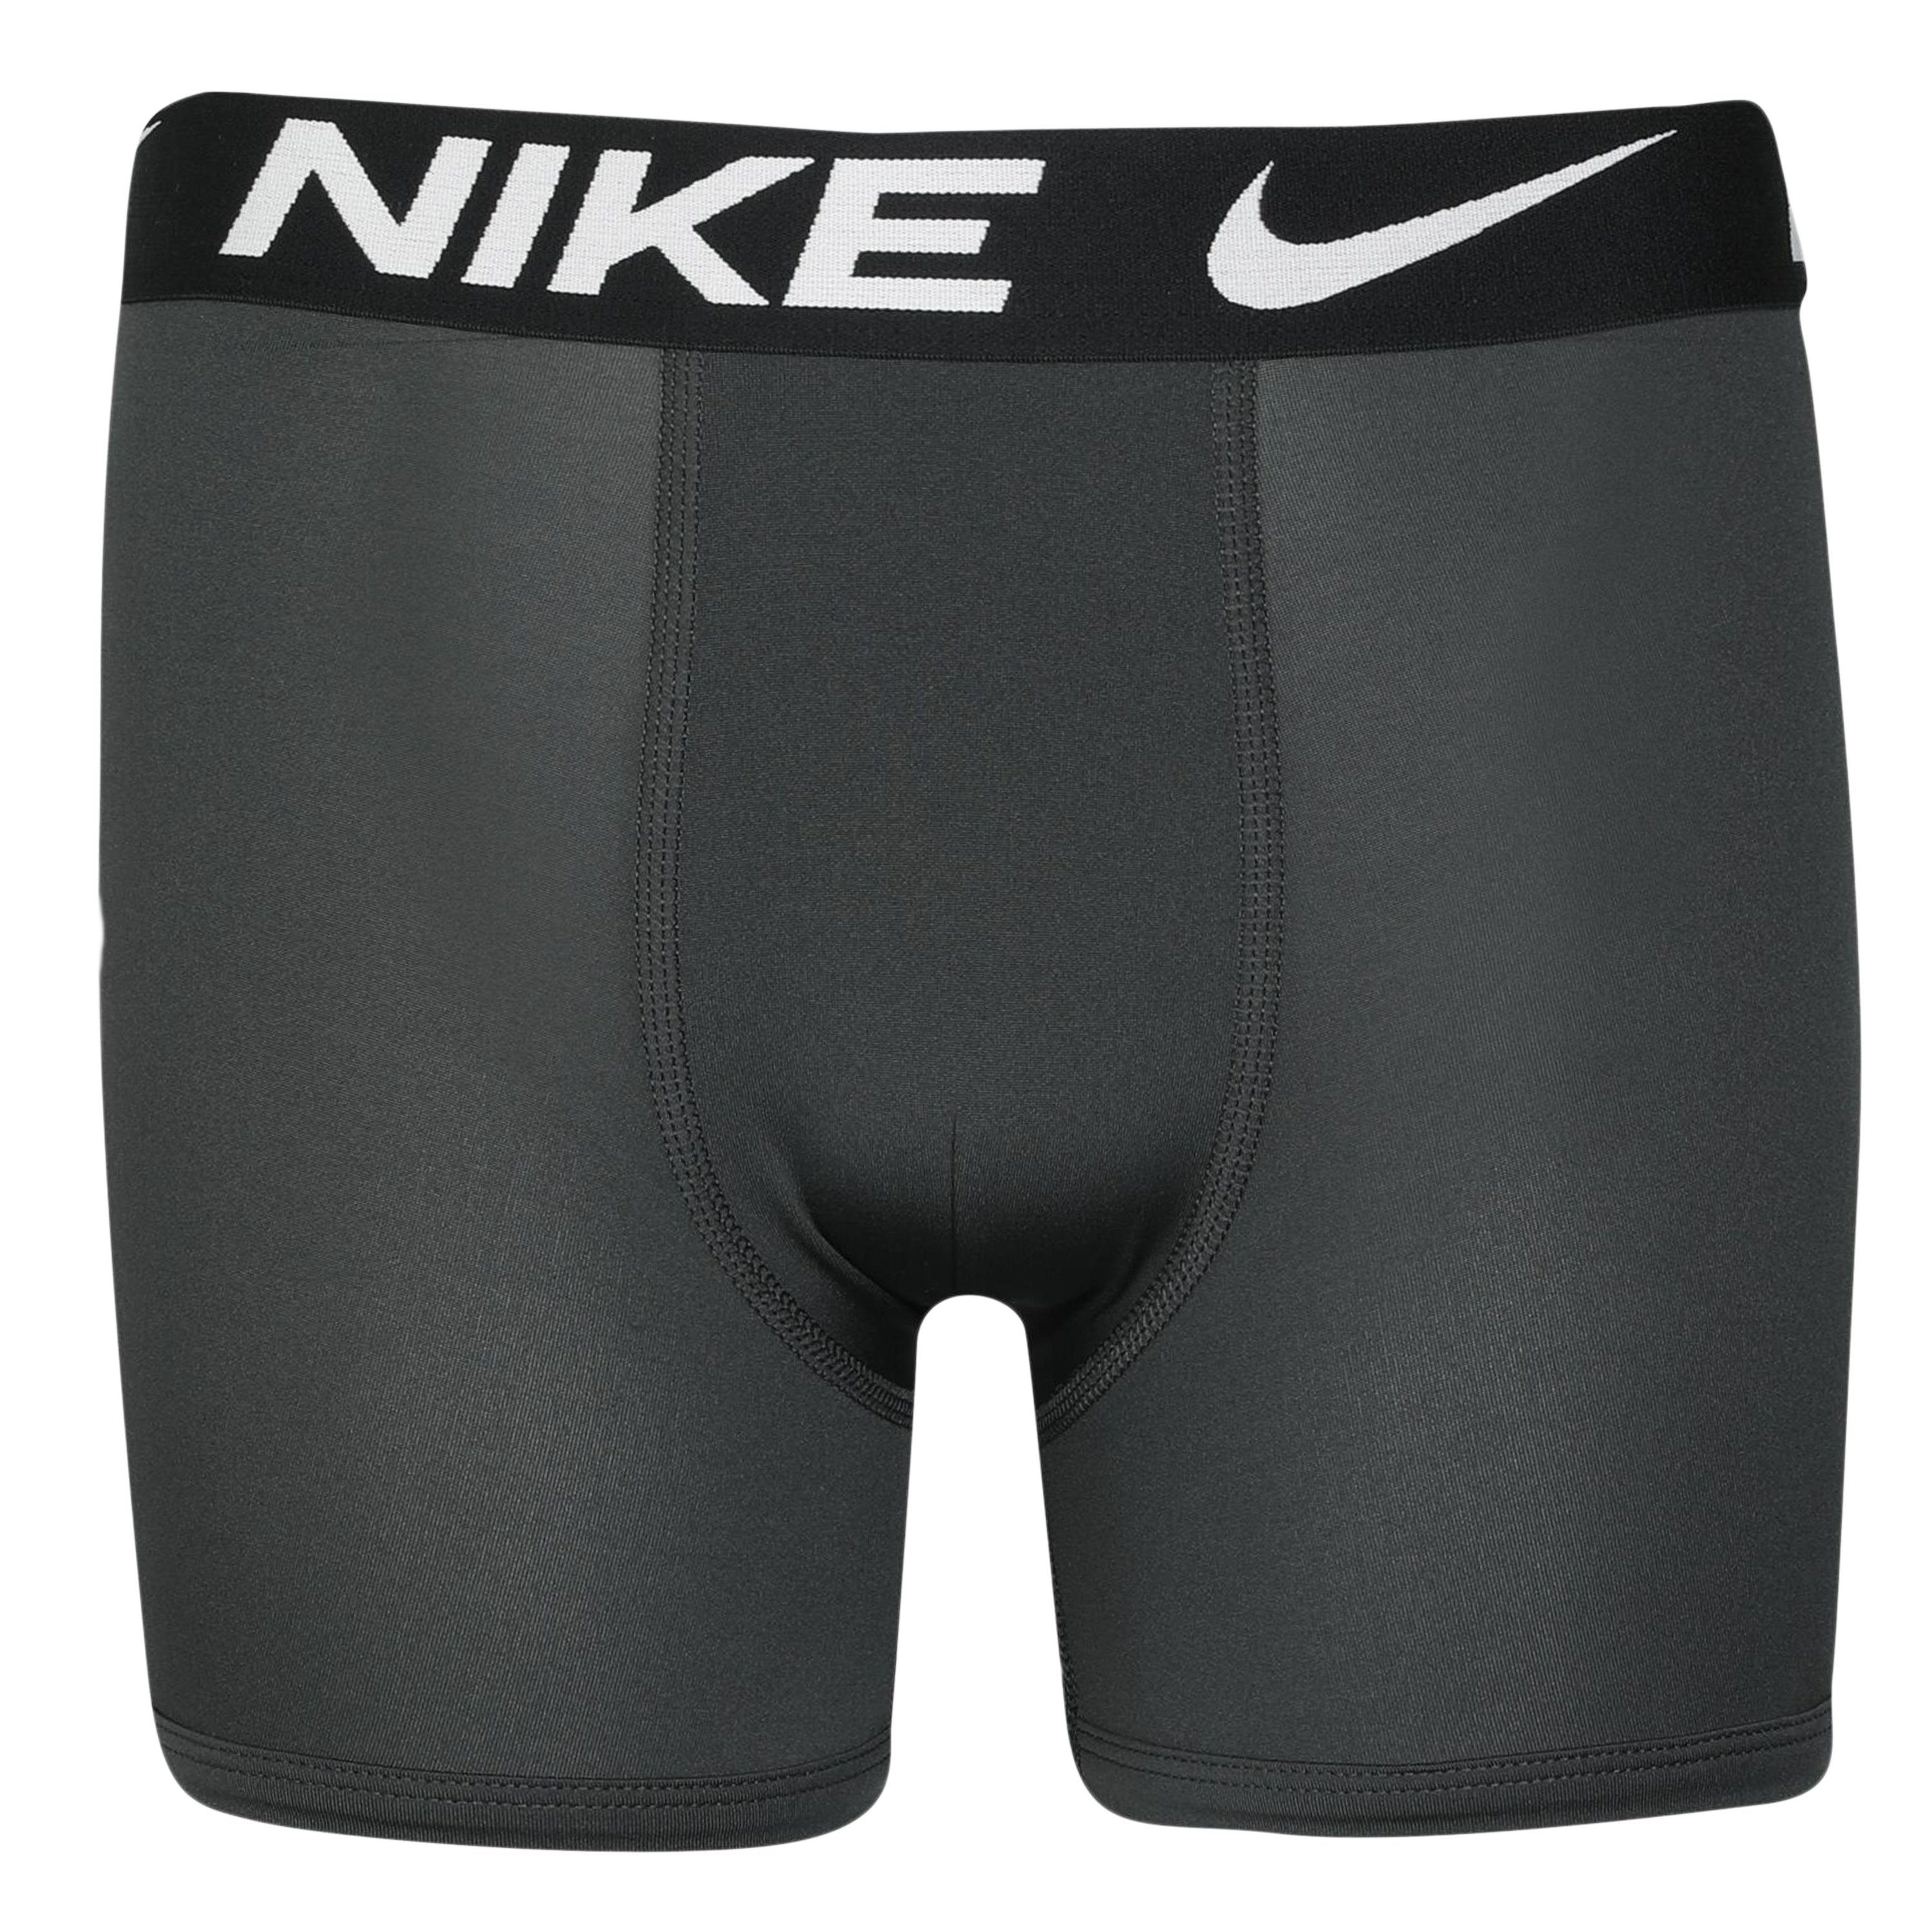 Nike Sportswear Boxershorts für Kinder red 3-St) (Packung, university